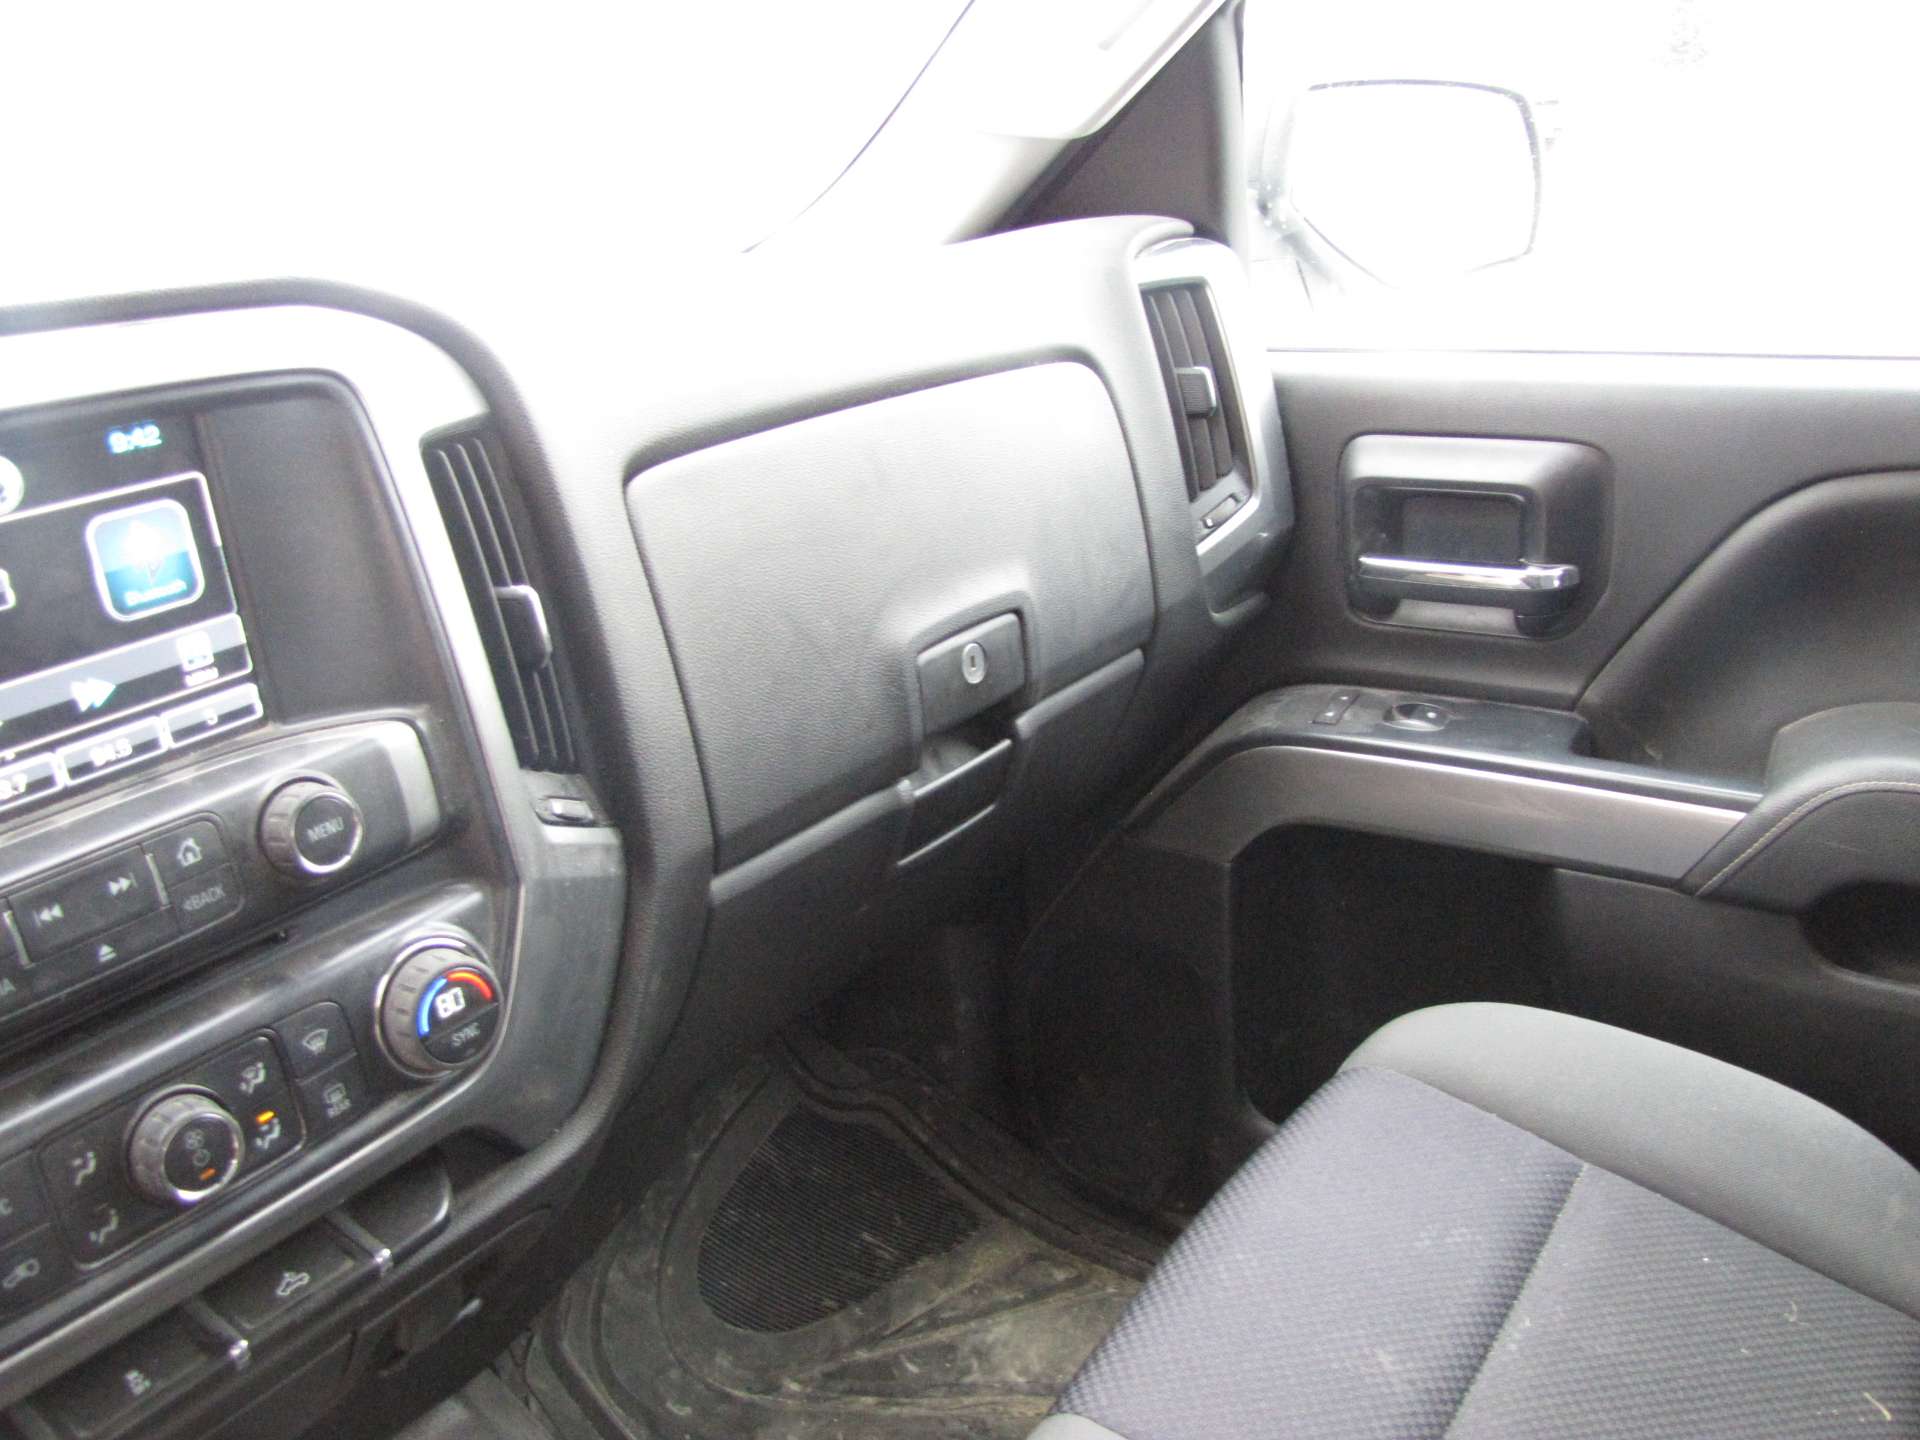 2014 Chevy Silverado 1500 pickup truck - Image 49 of 55